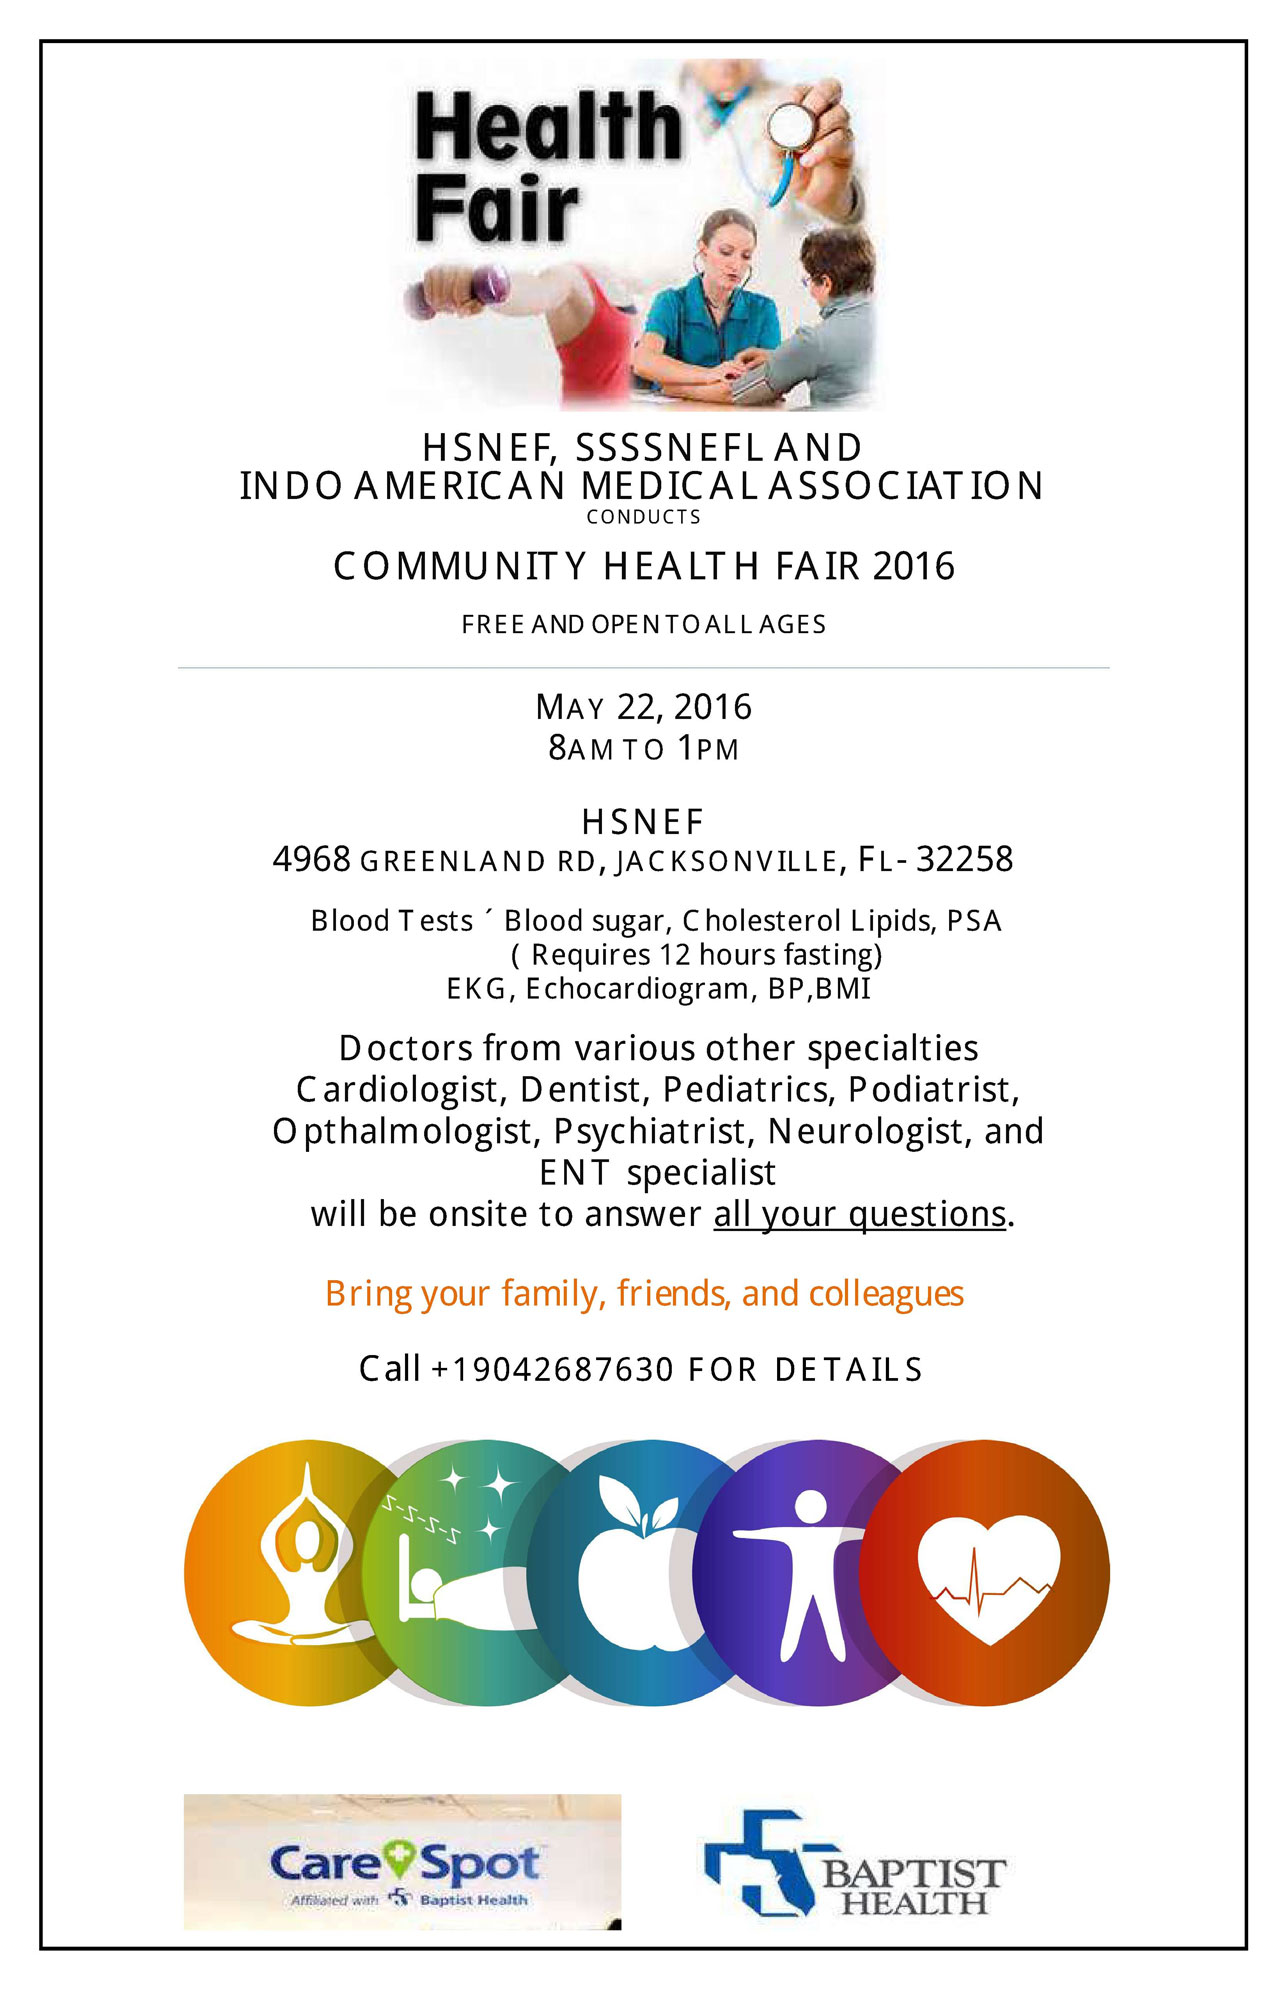 Health Fair 2016 Event Details